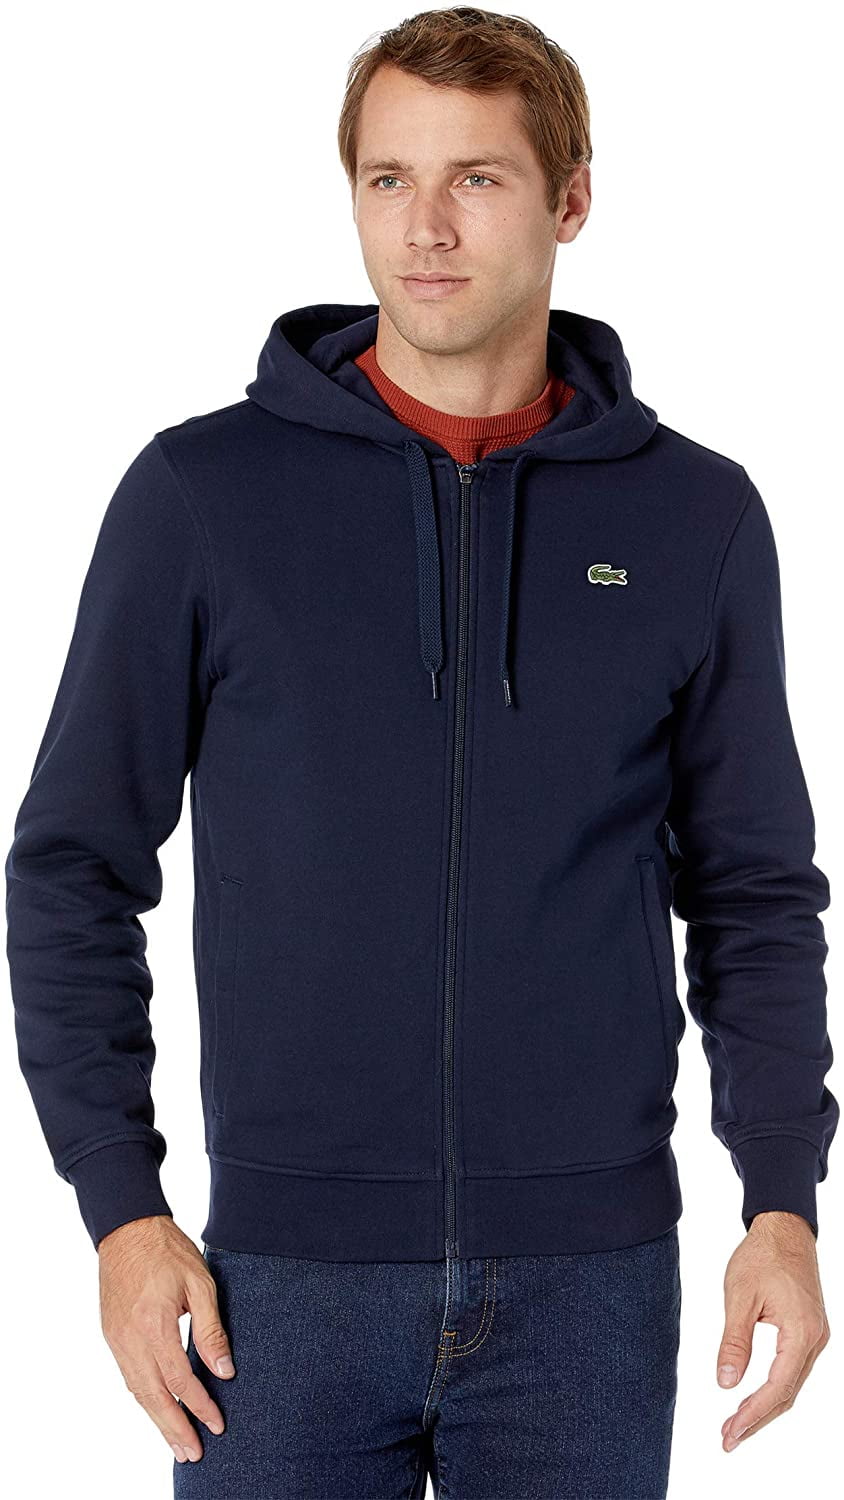 Lacoste Mens Sport Long Sleeve Fleece Full Zip Sweatshirt 3X-Large Navy Blue/Navy Blue - Walmart.com